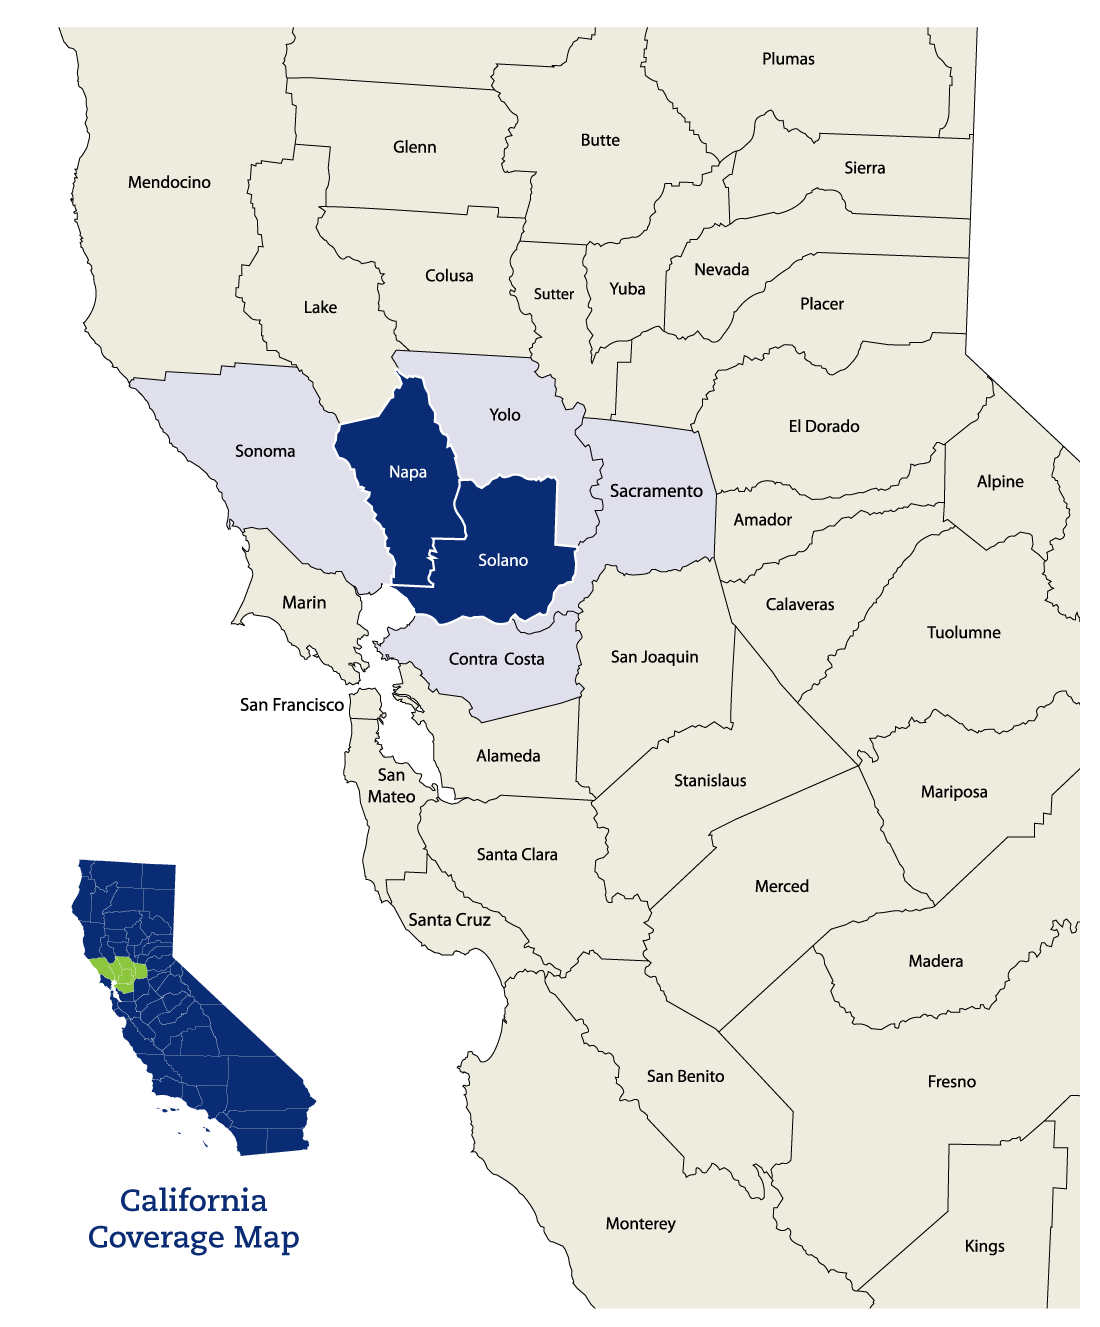 California Coverage Map